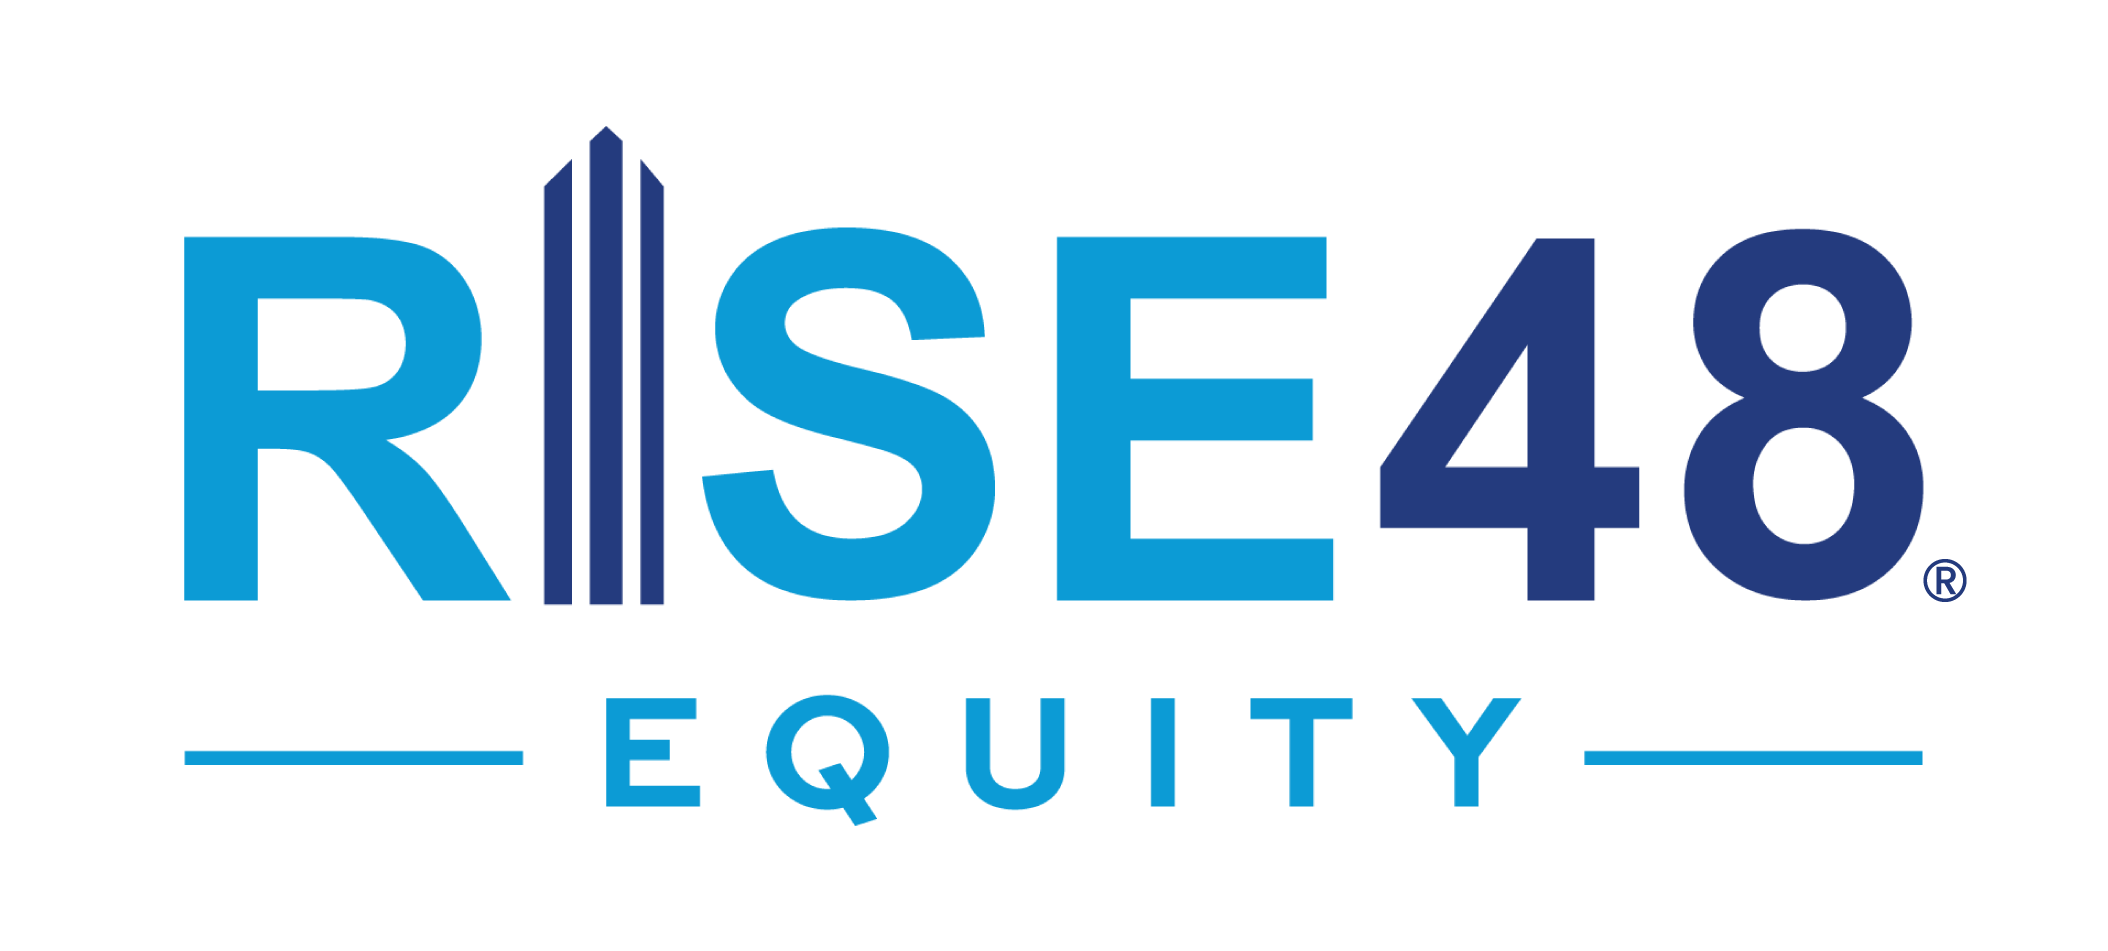 Rise48 Equity logo